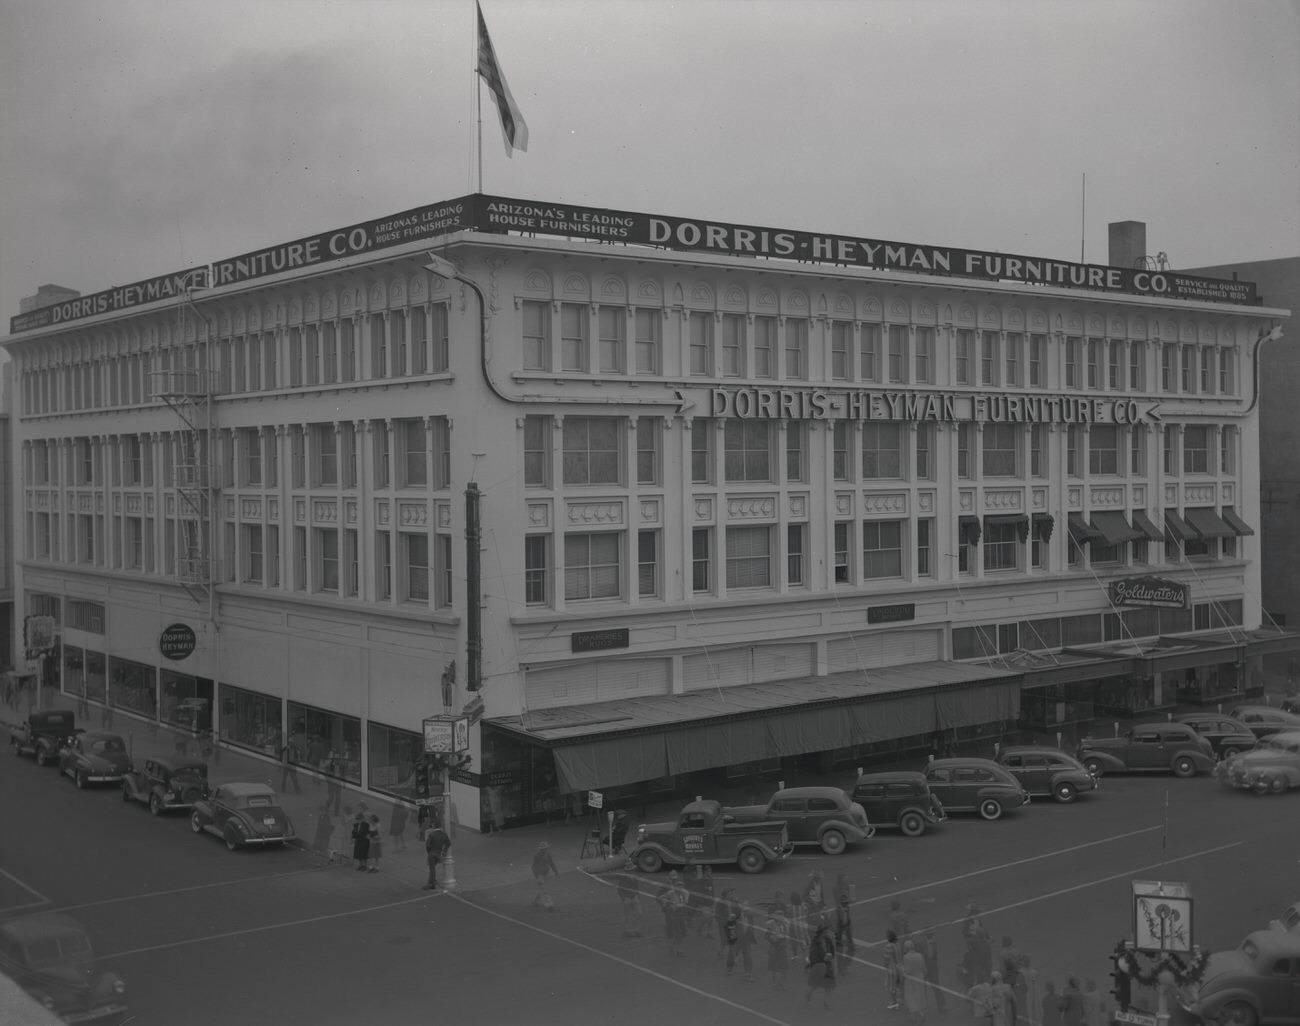 Dorris-Heyman Furniture Company Building, 1942